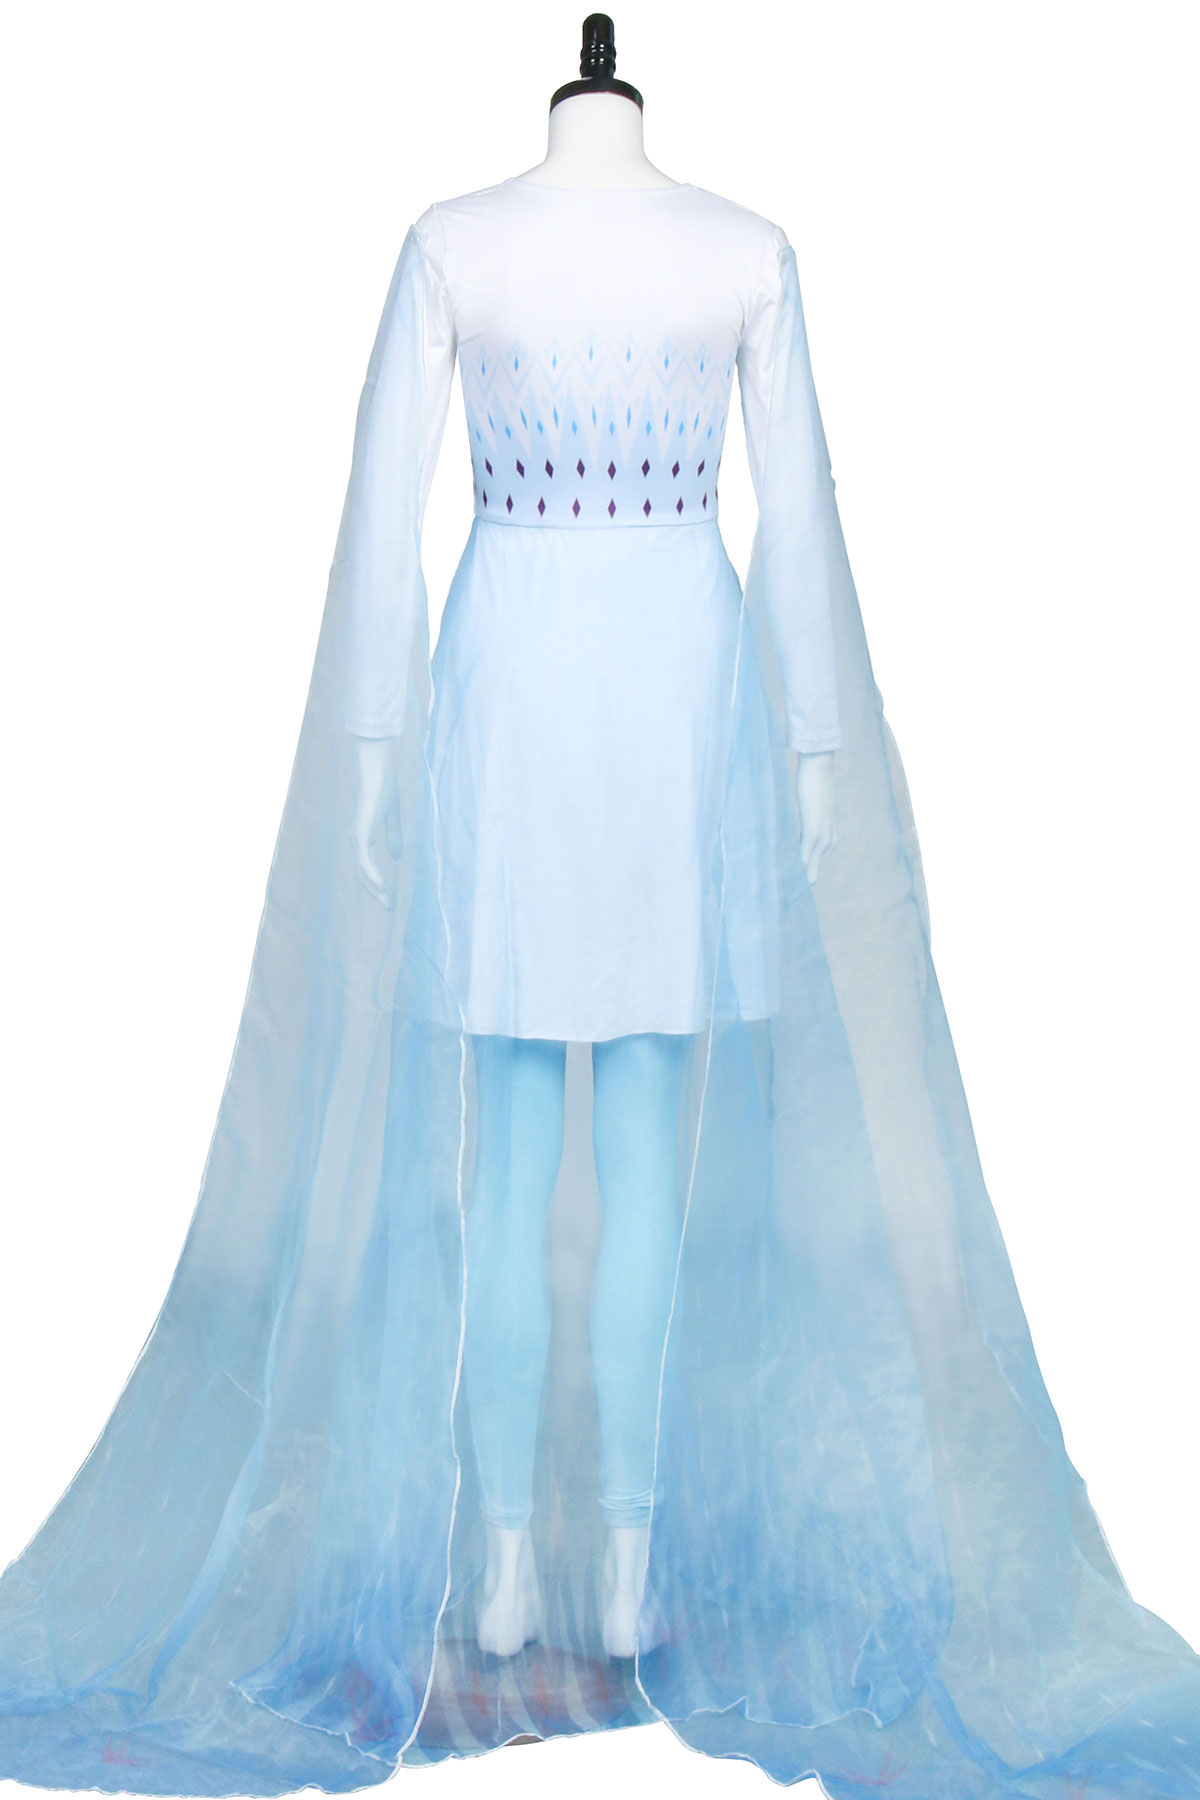 Disney Frozen 2 Elsa Ahtohallan Cave Queen White Blue Gown Dress Halloween Cosplay Costume-Takerlama